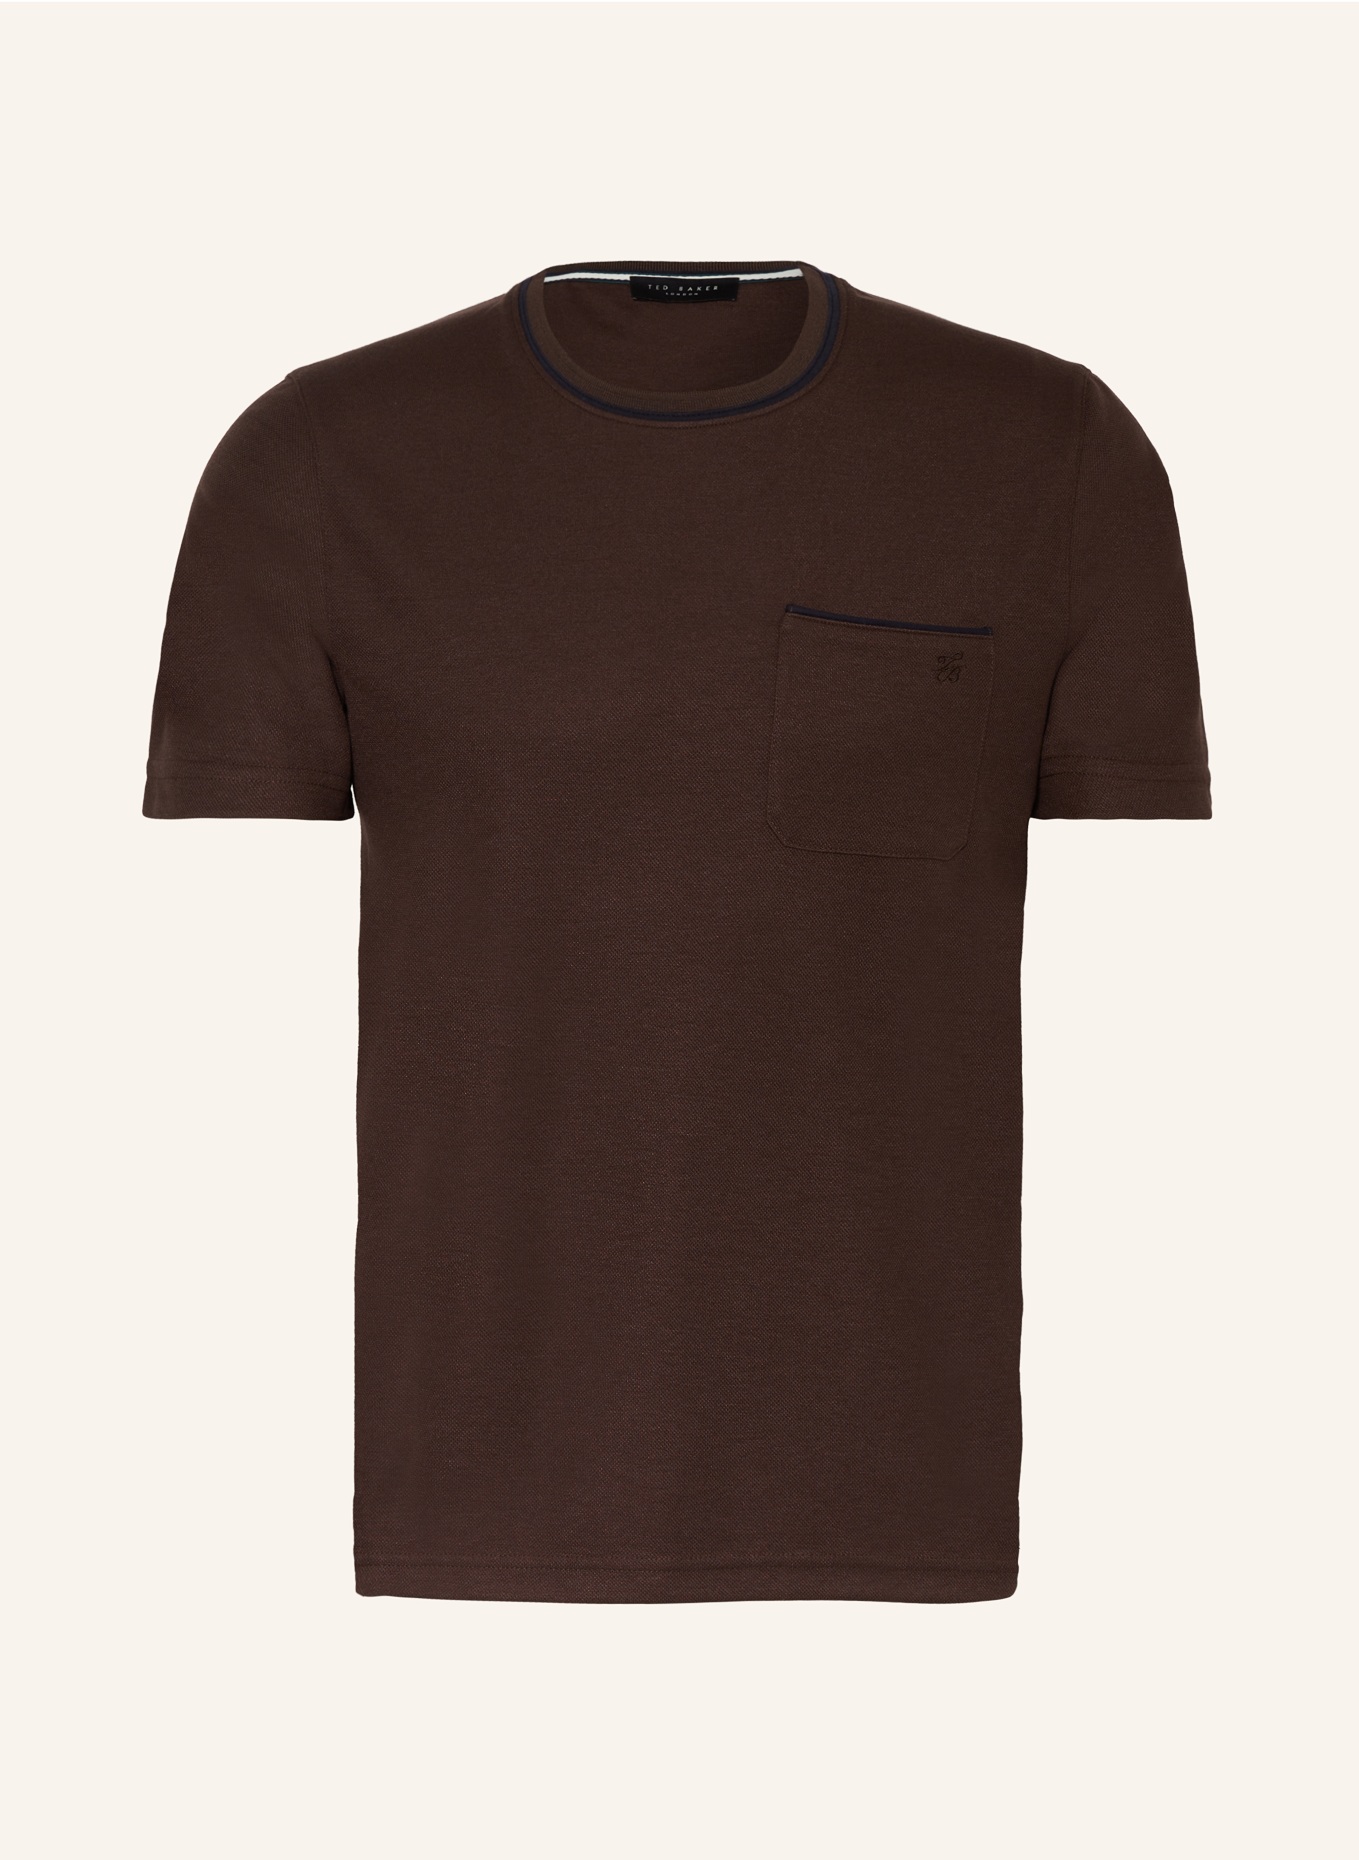 TED BAKER T-Shirt GRINE, Farbe: DUNKELBRAUN (Bild 1)